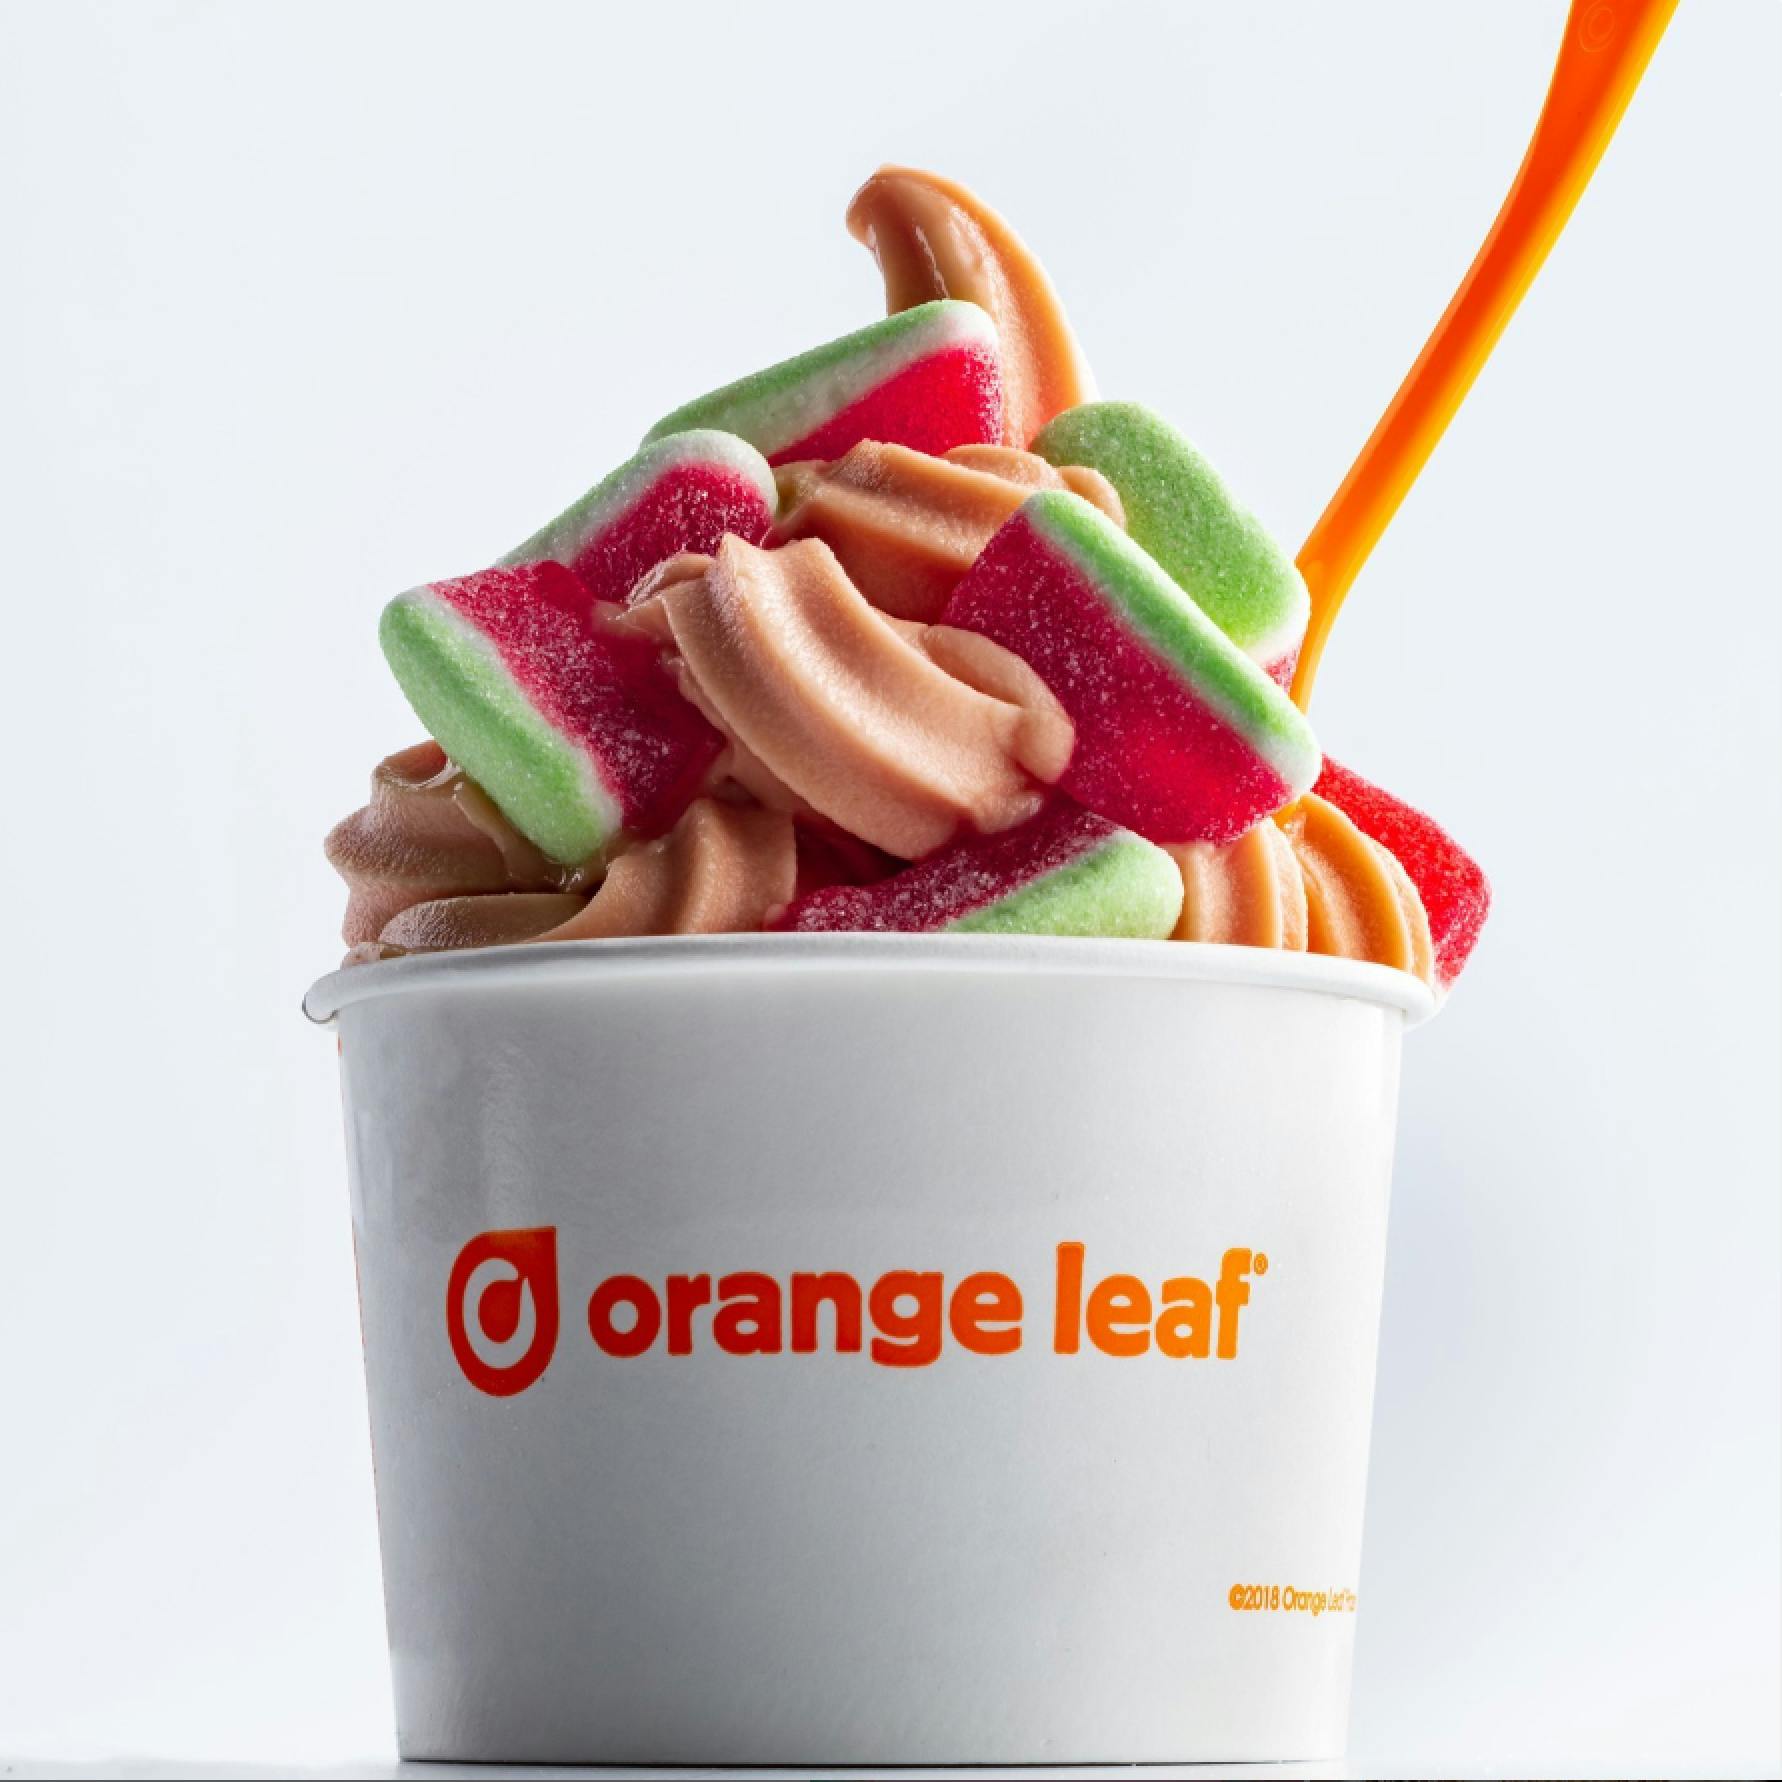 Orange Leaf fro-yo chain opens 3 Texas locations including one in San Antonio